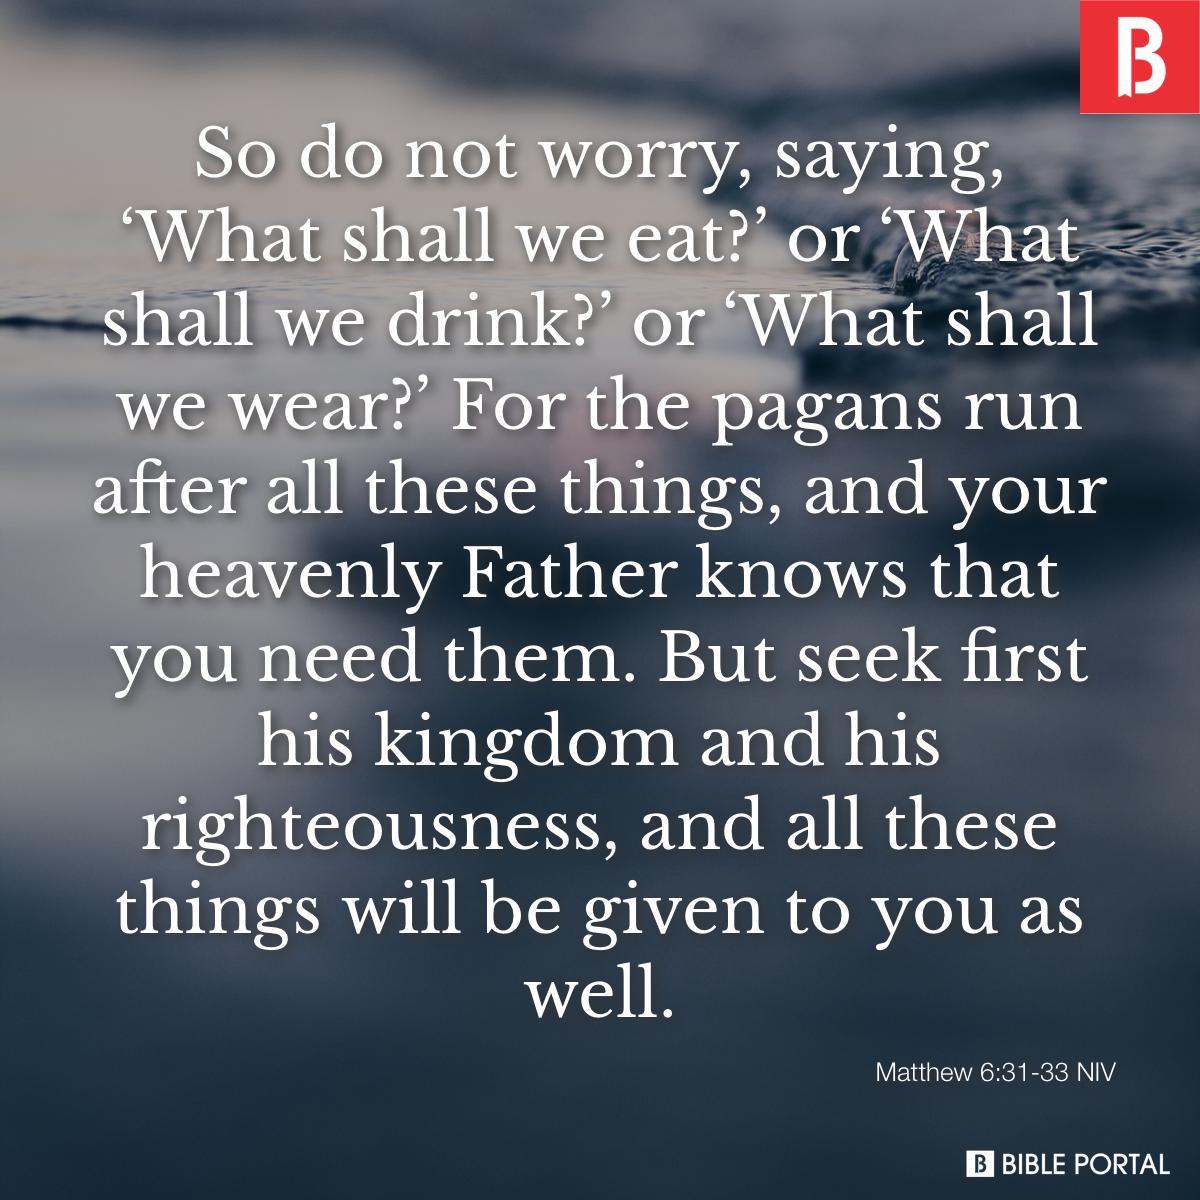 Matthew 6:31-33 NIV